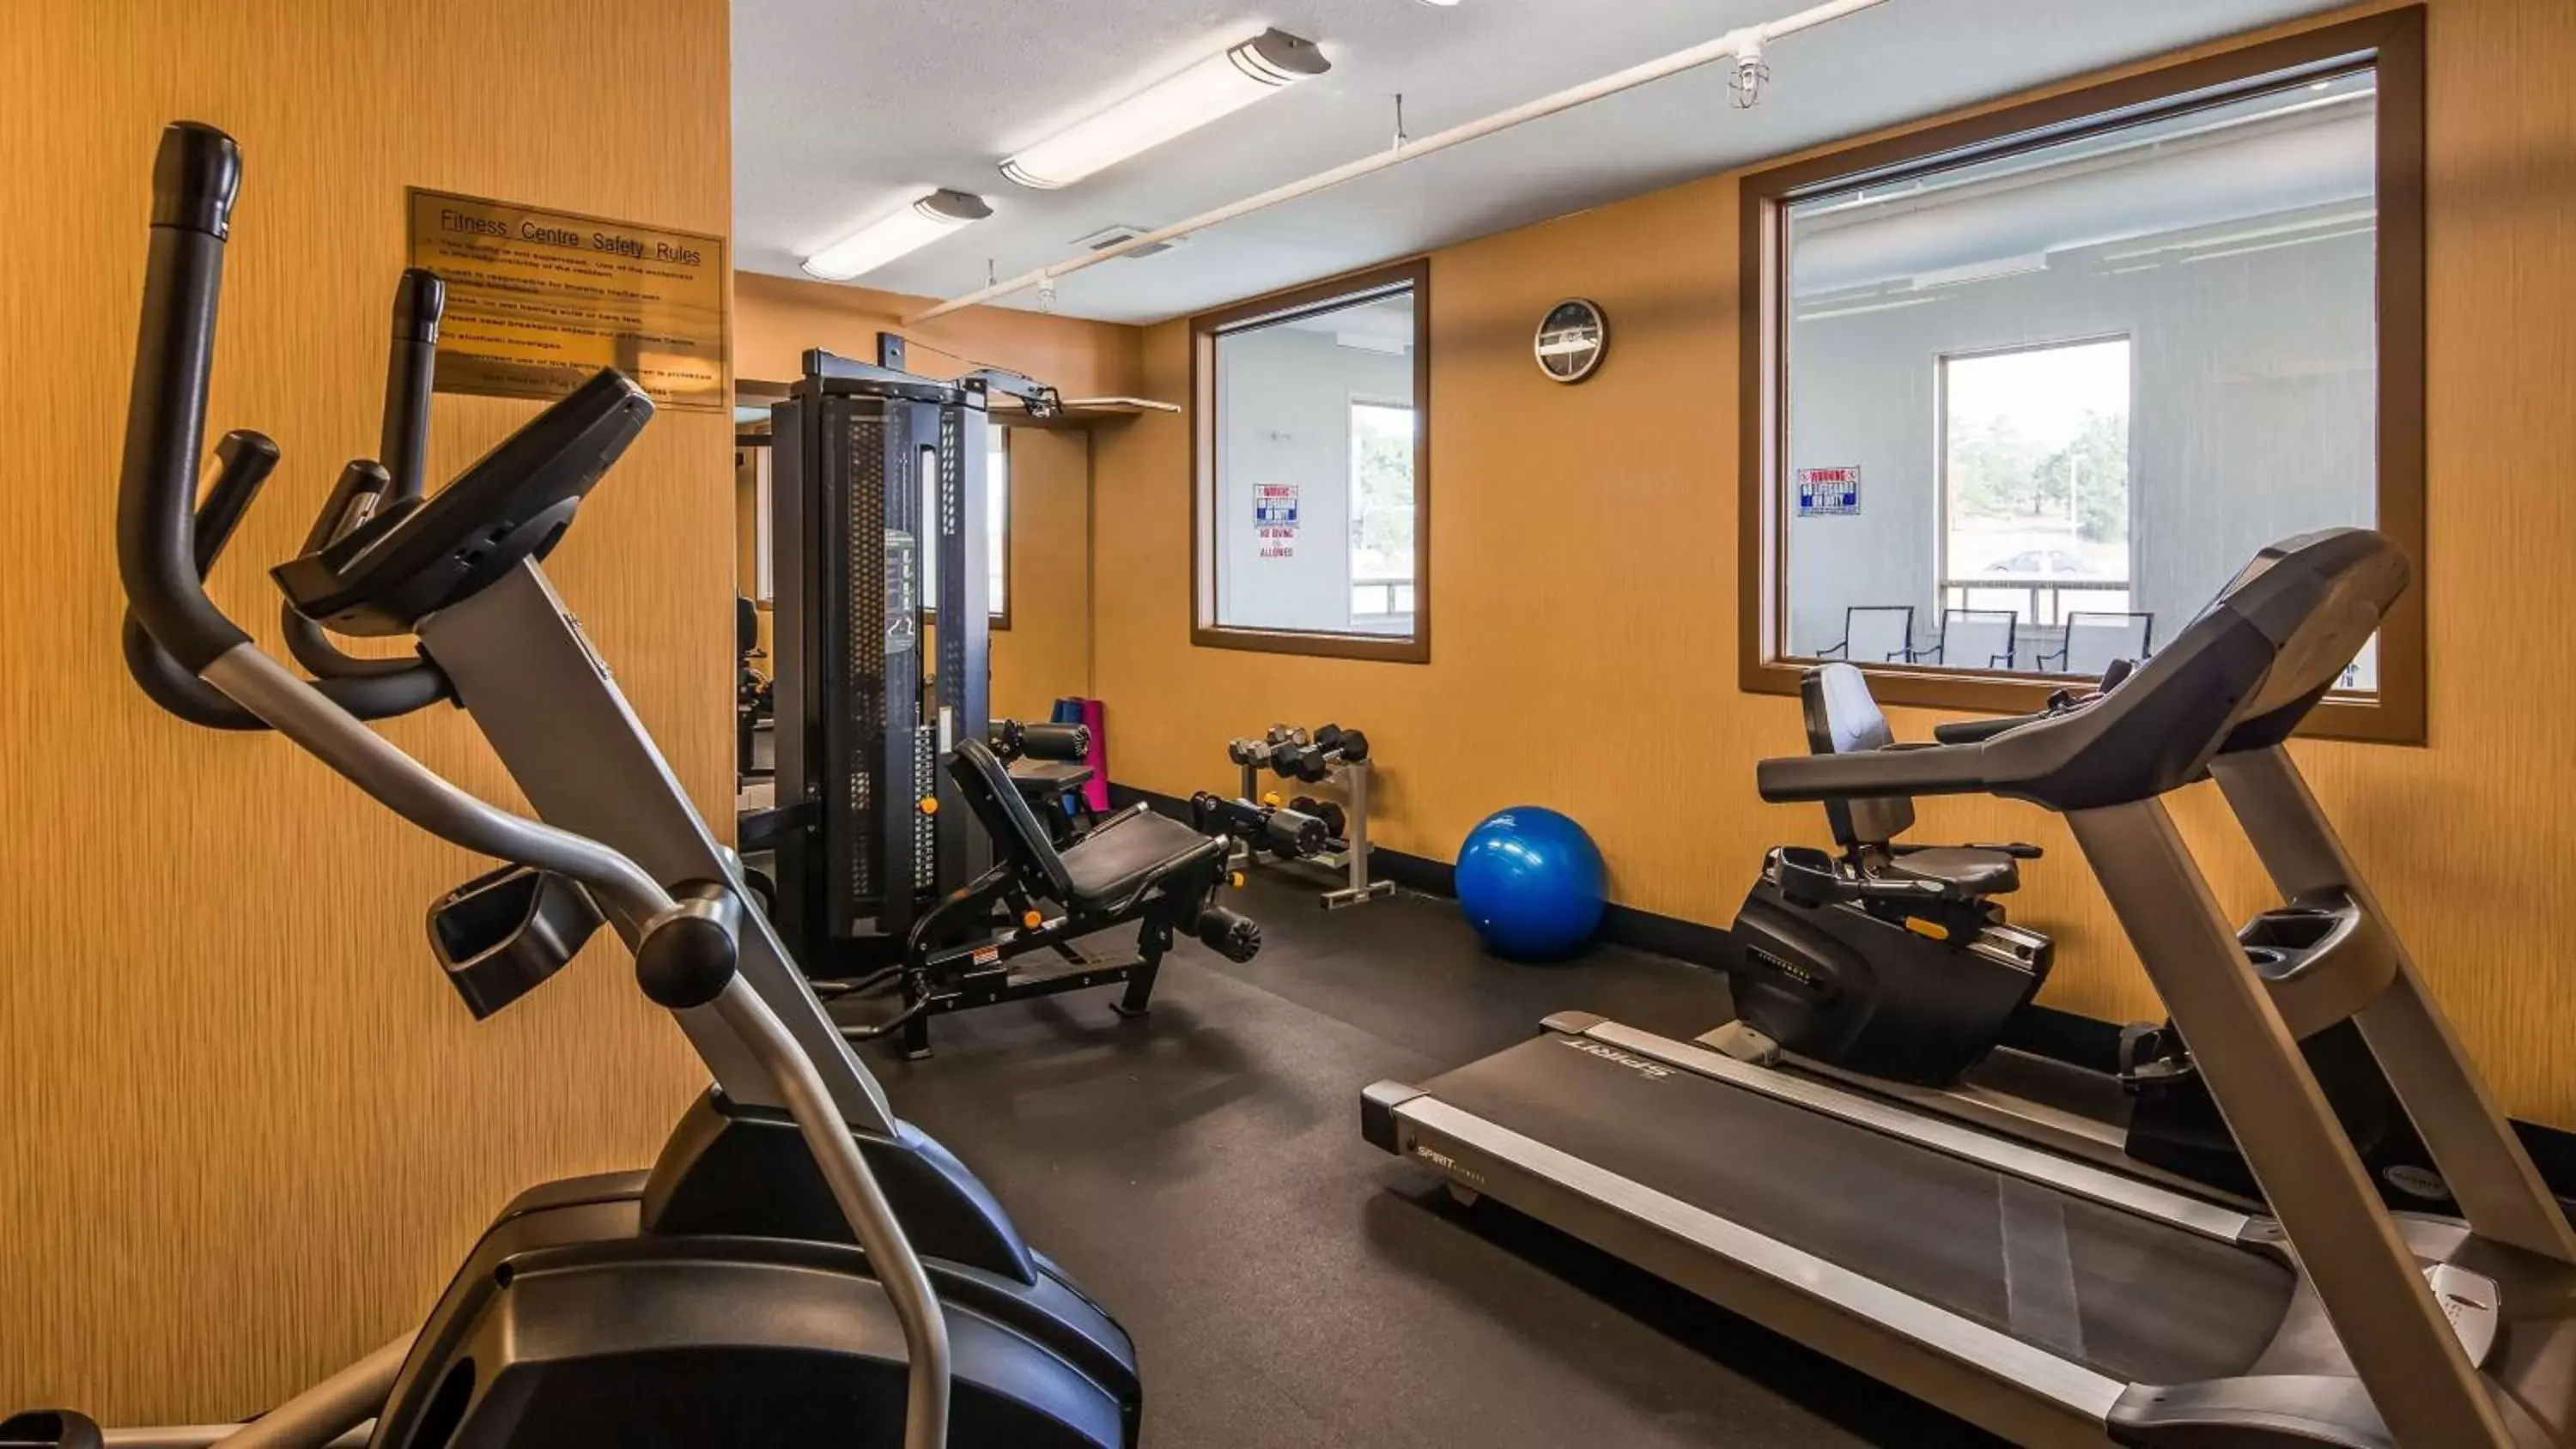 Fitness centre/facilities, Fitness Center/Facilities in Best Western Plus Estevan Inn & Suites